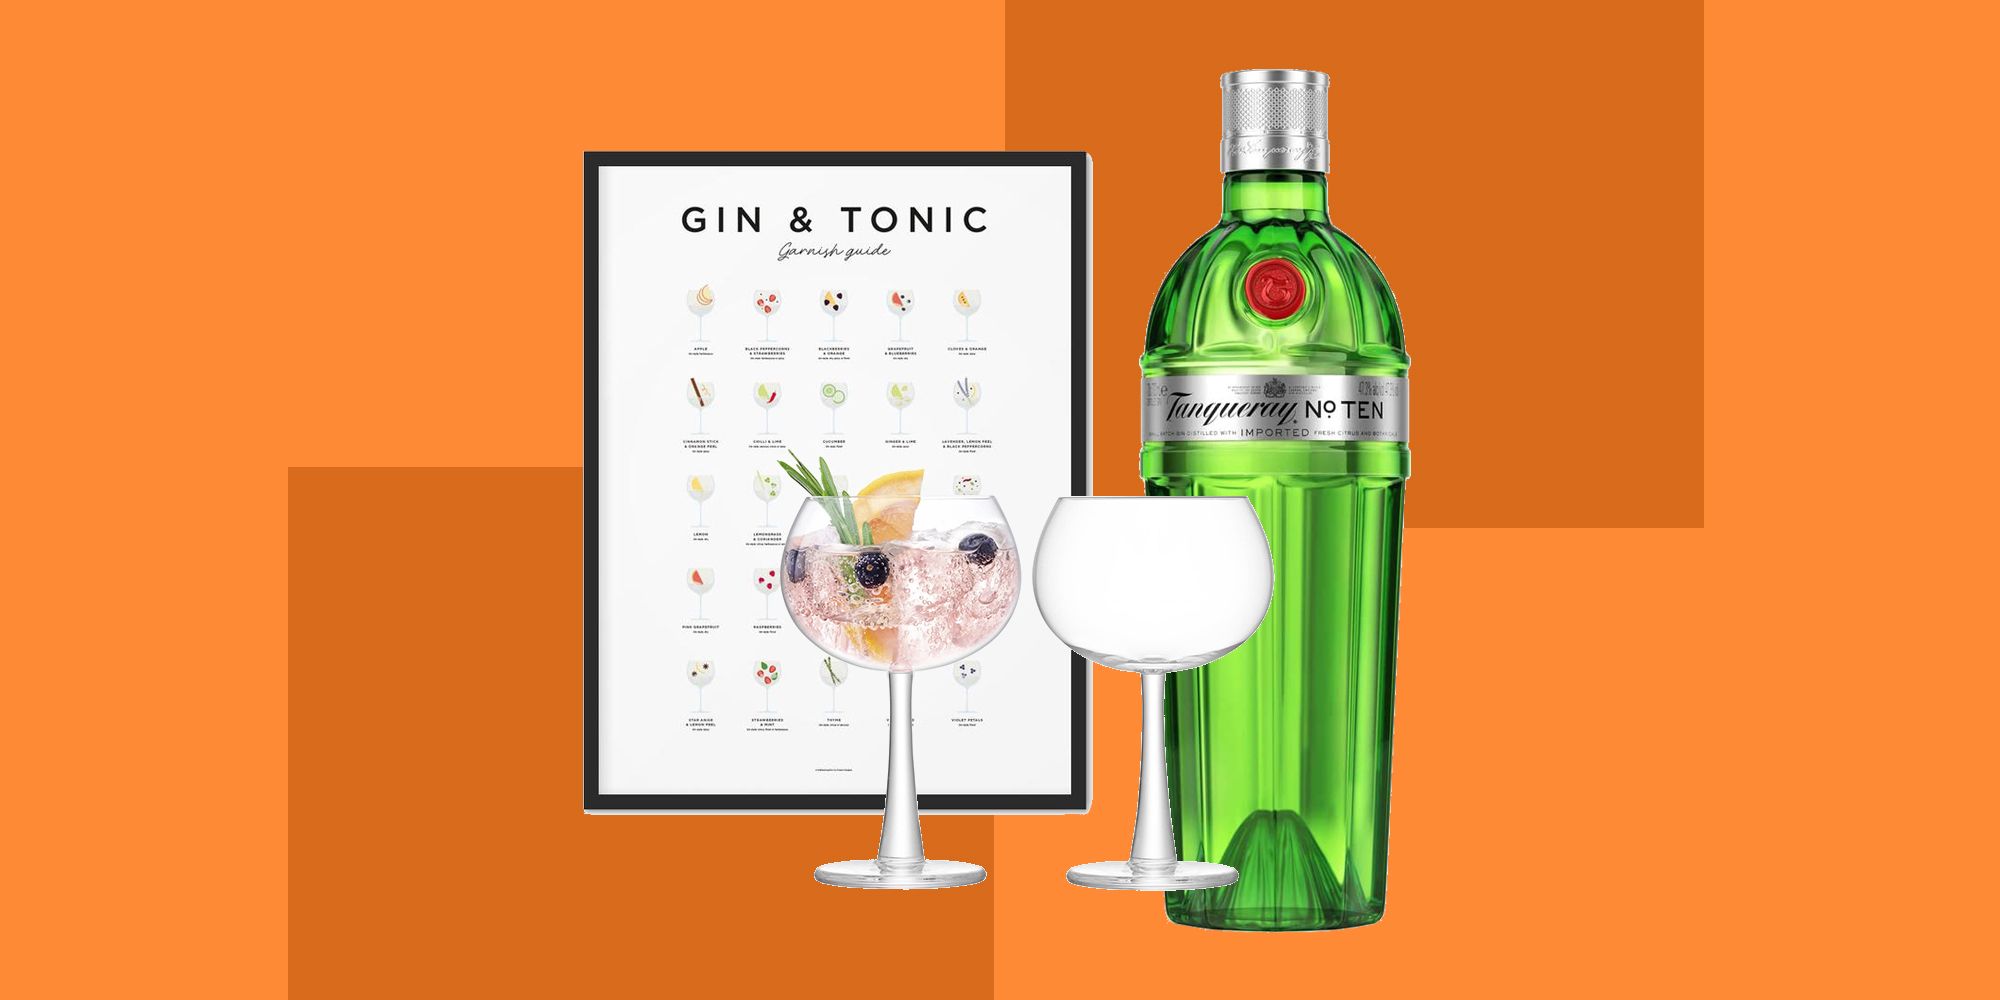 gin present ideas